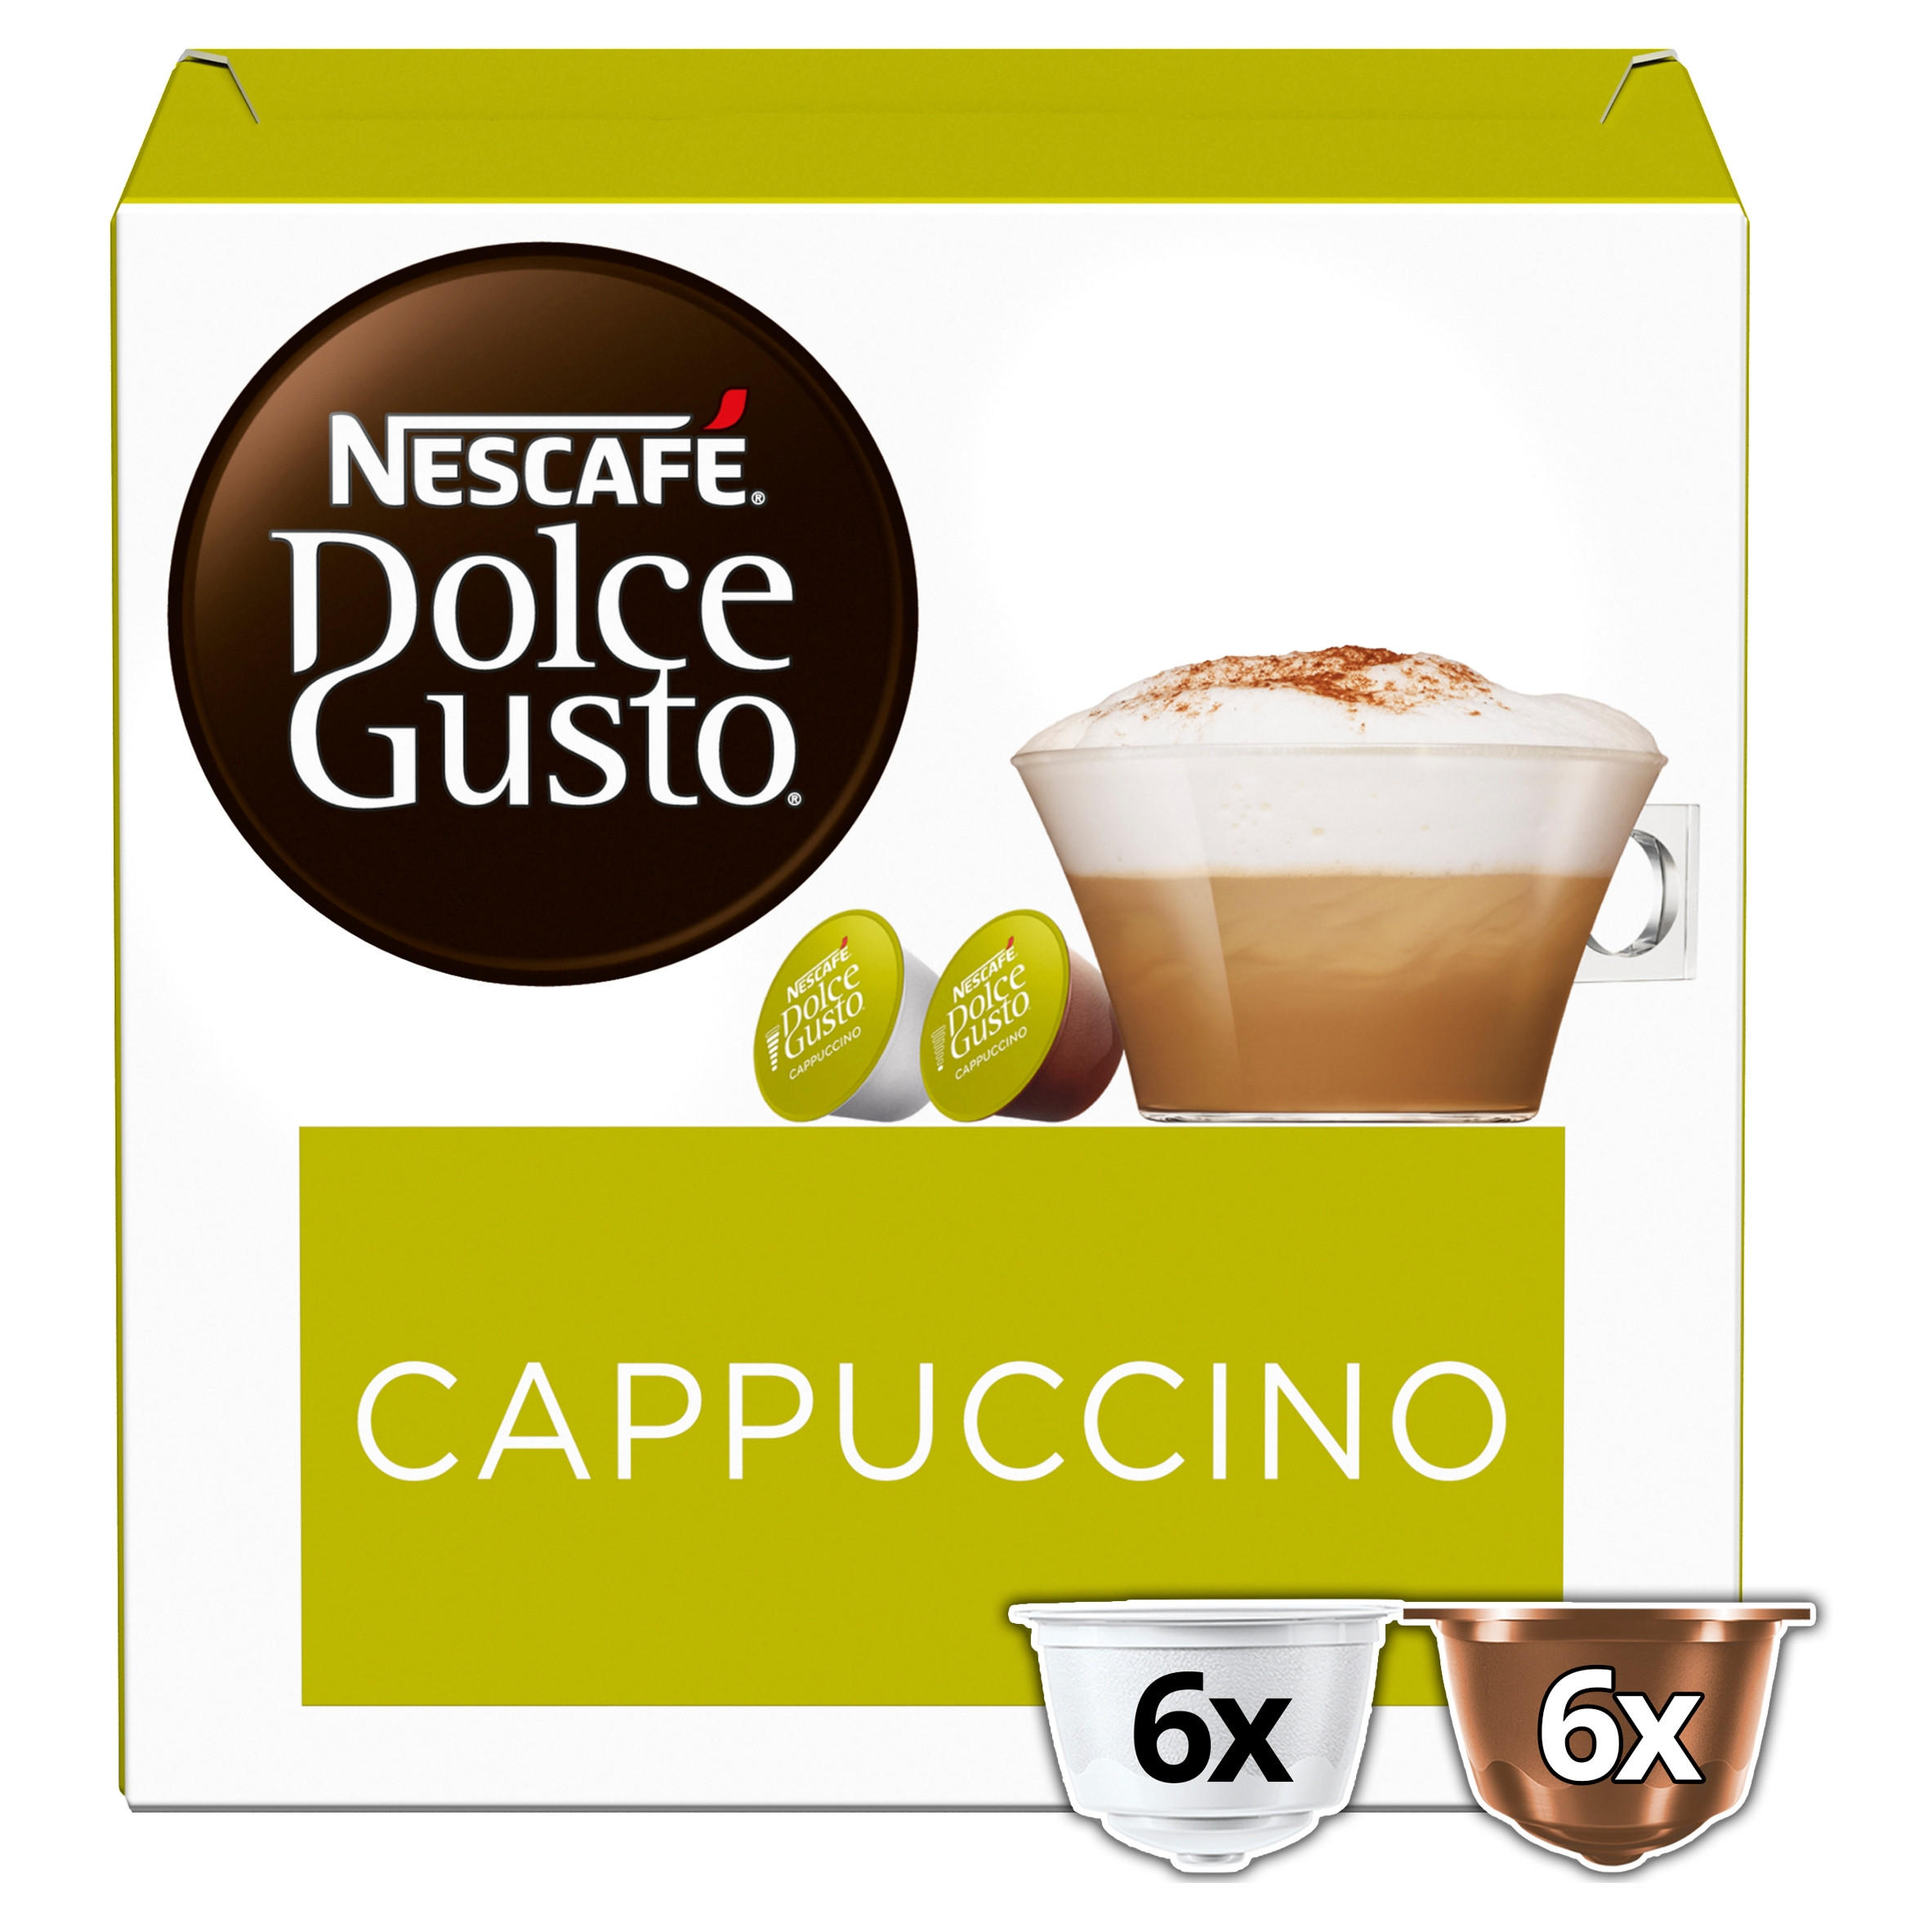 Nescafe Dolce Gusto Cappuccino Coffee Pods x 12, Coffee Machine Pods